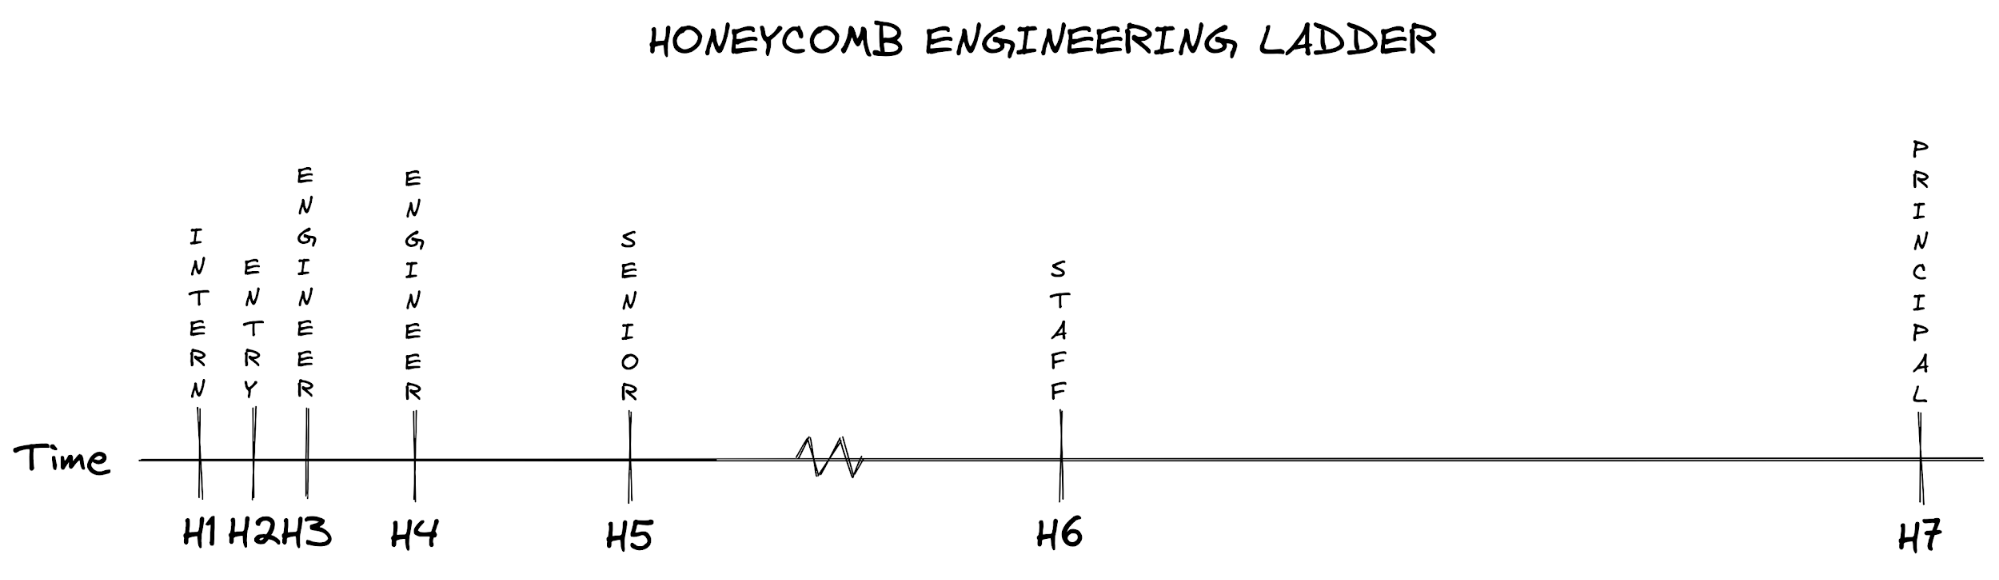 Honeycomb Engineering Ladder diagram